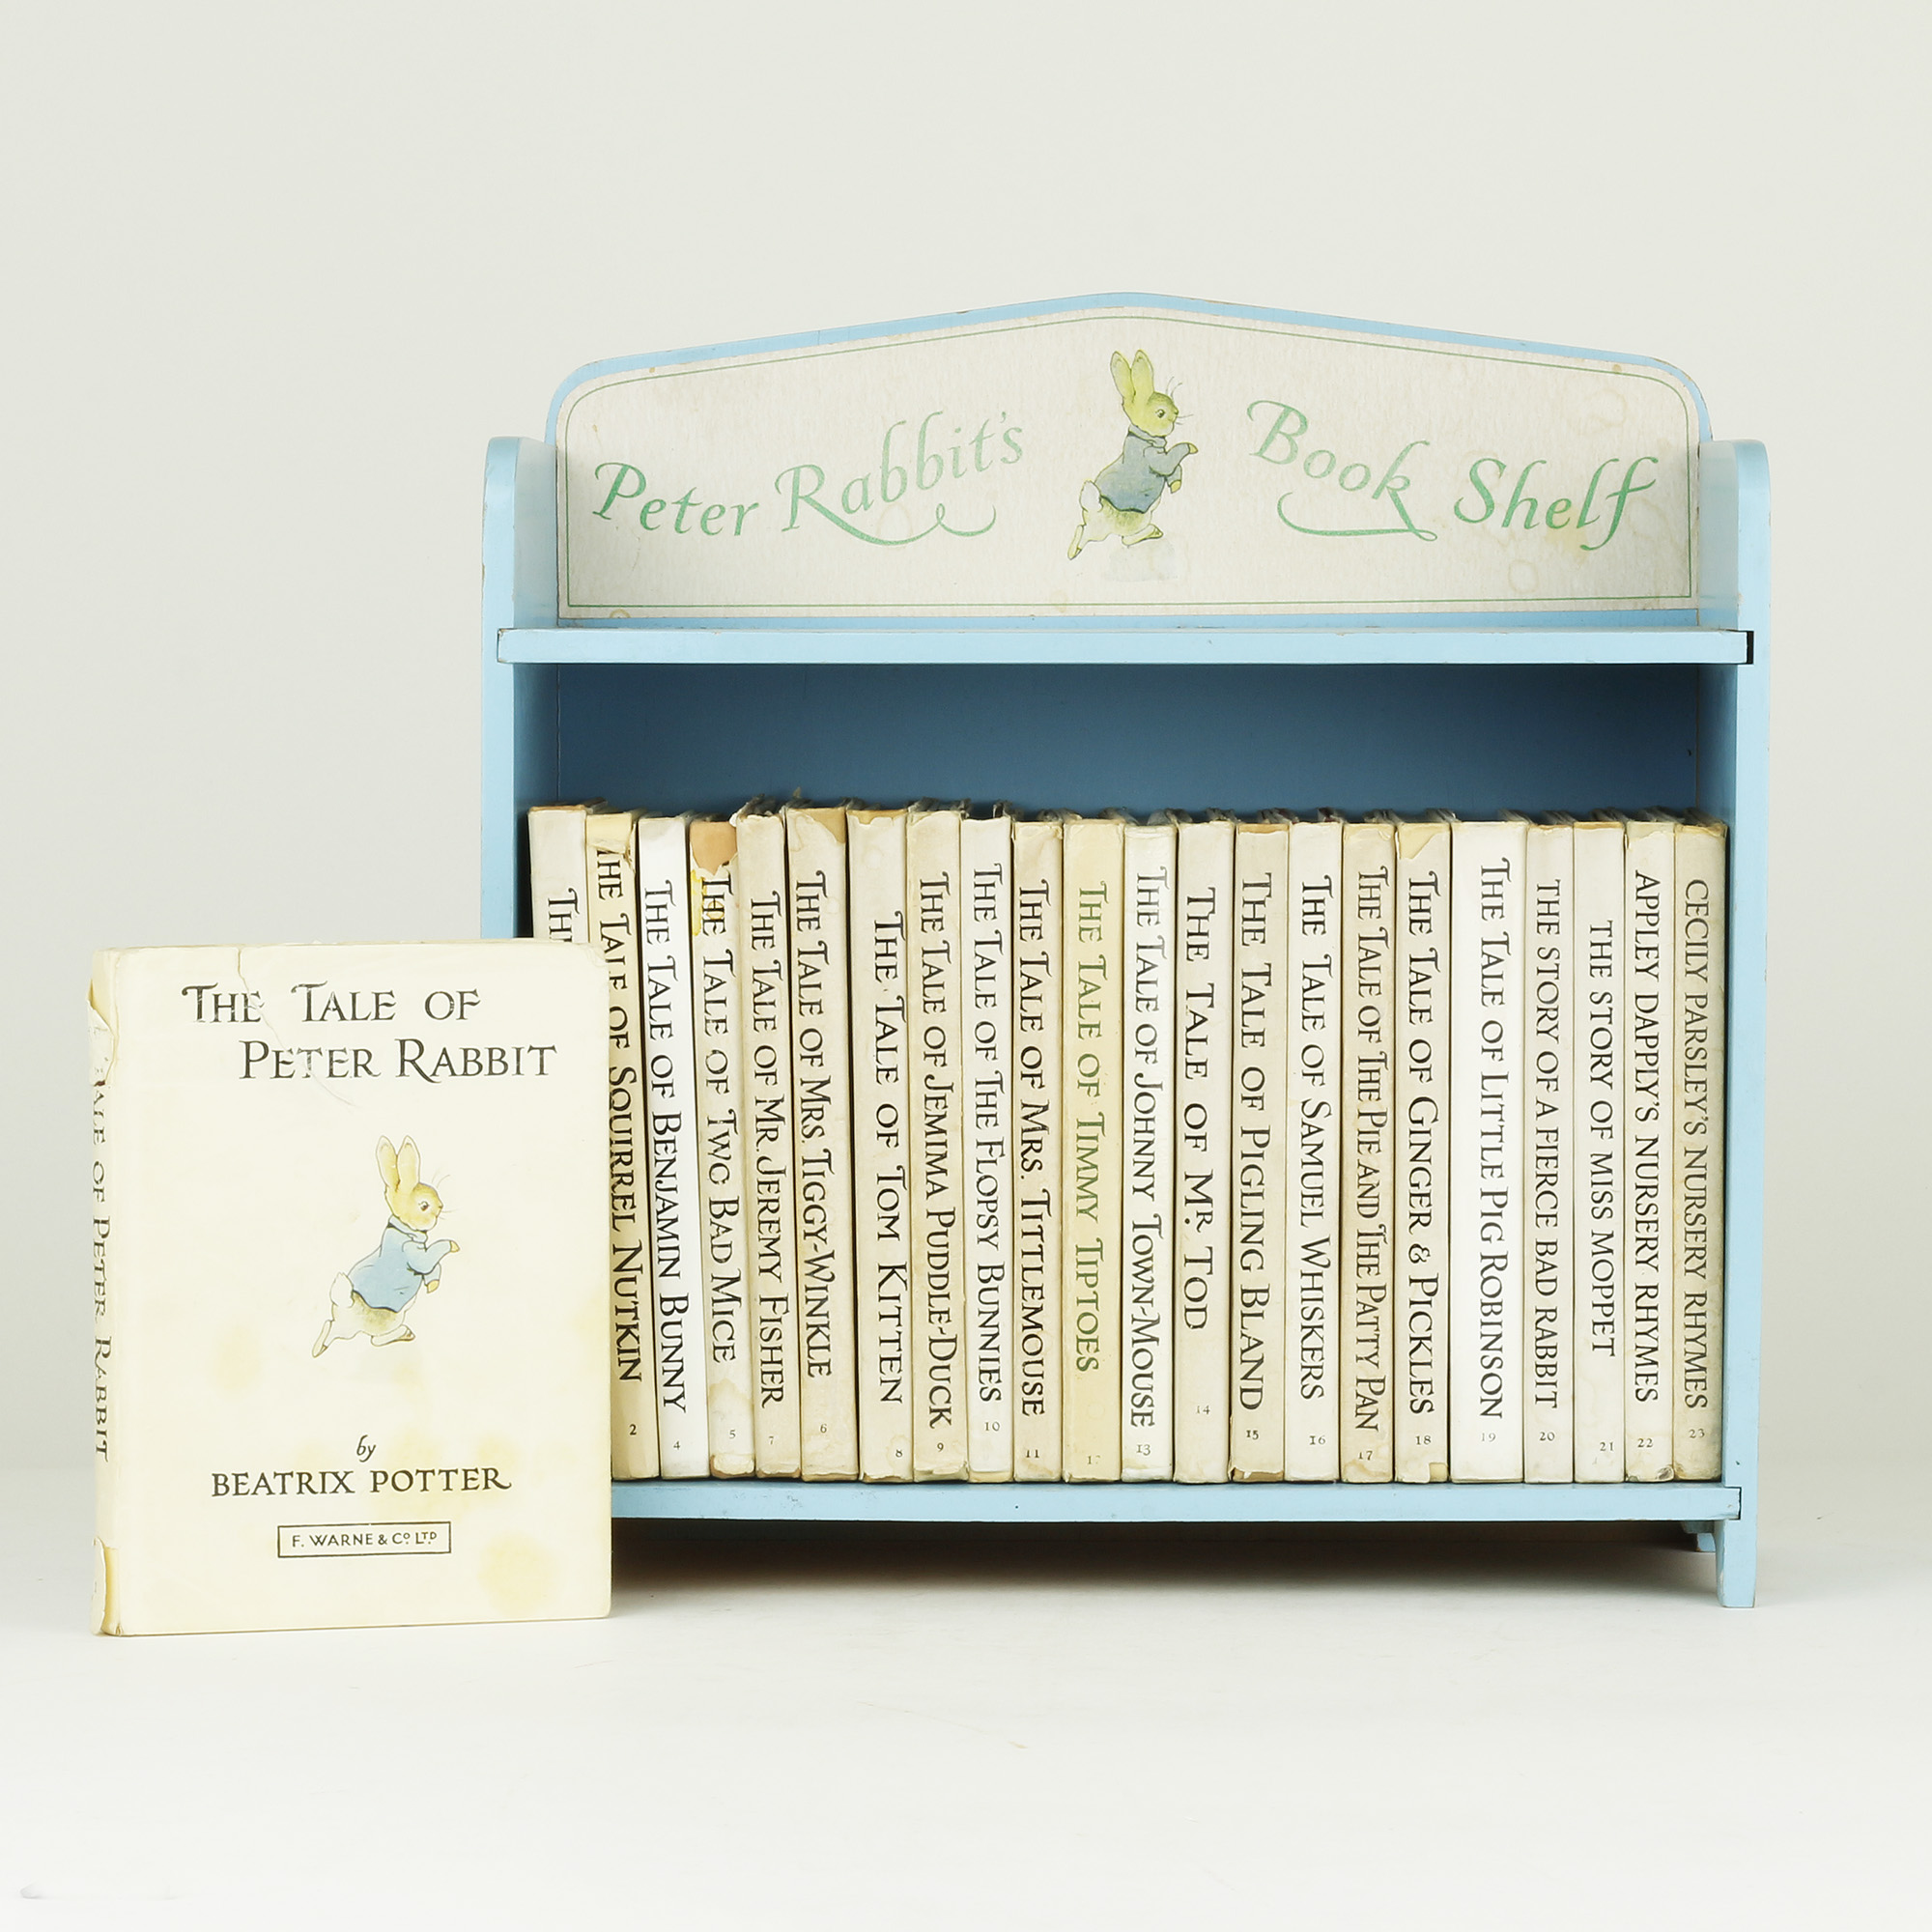 Peter Rabbit S Book Shelf By Potter Beatrix Jonkers Rare Books